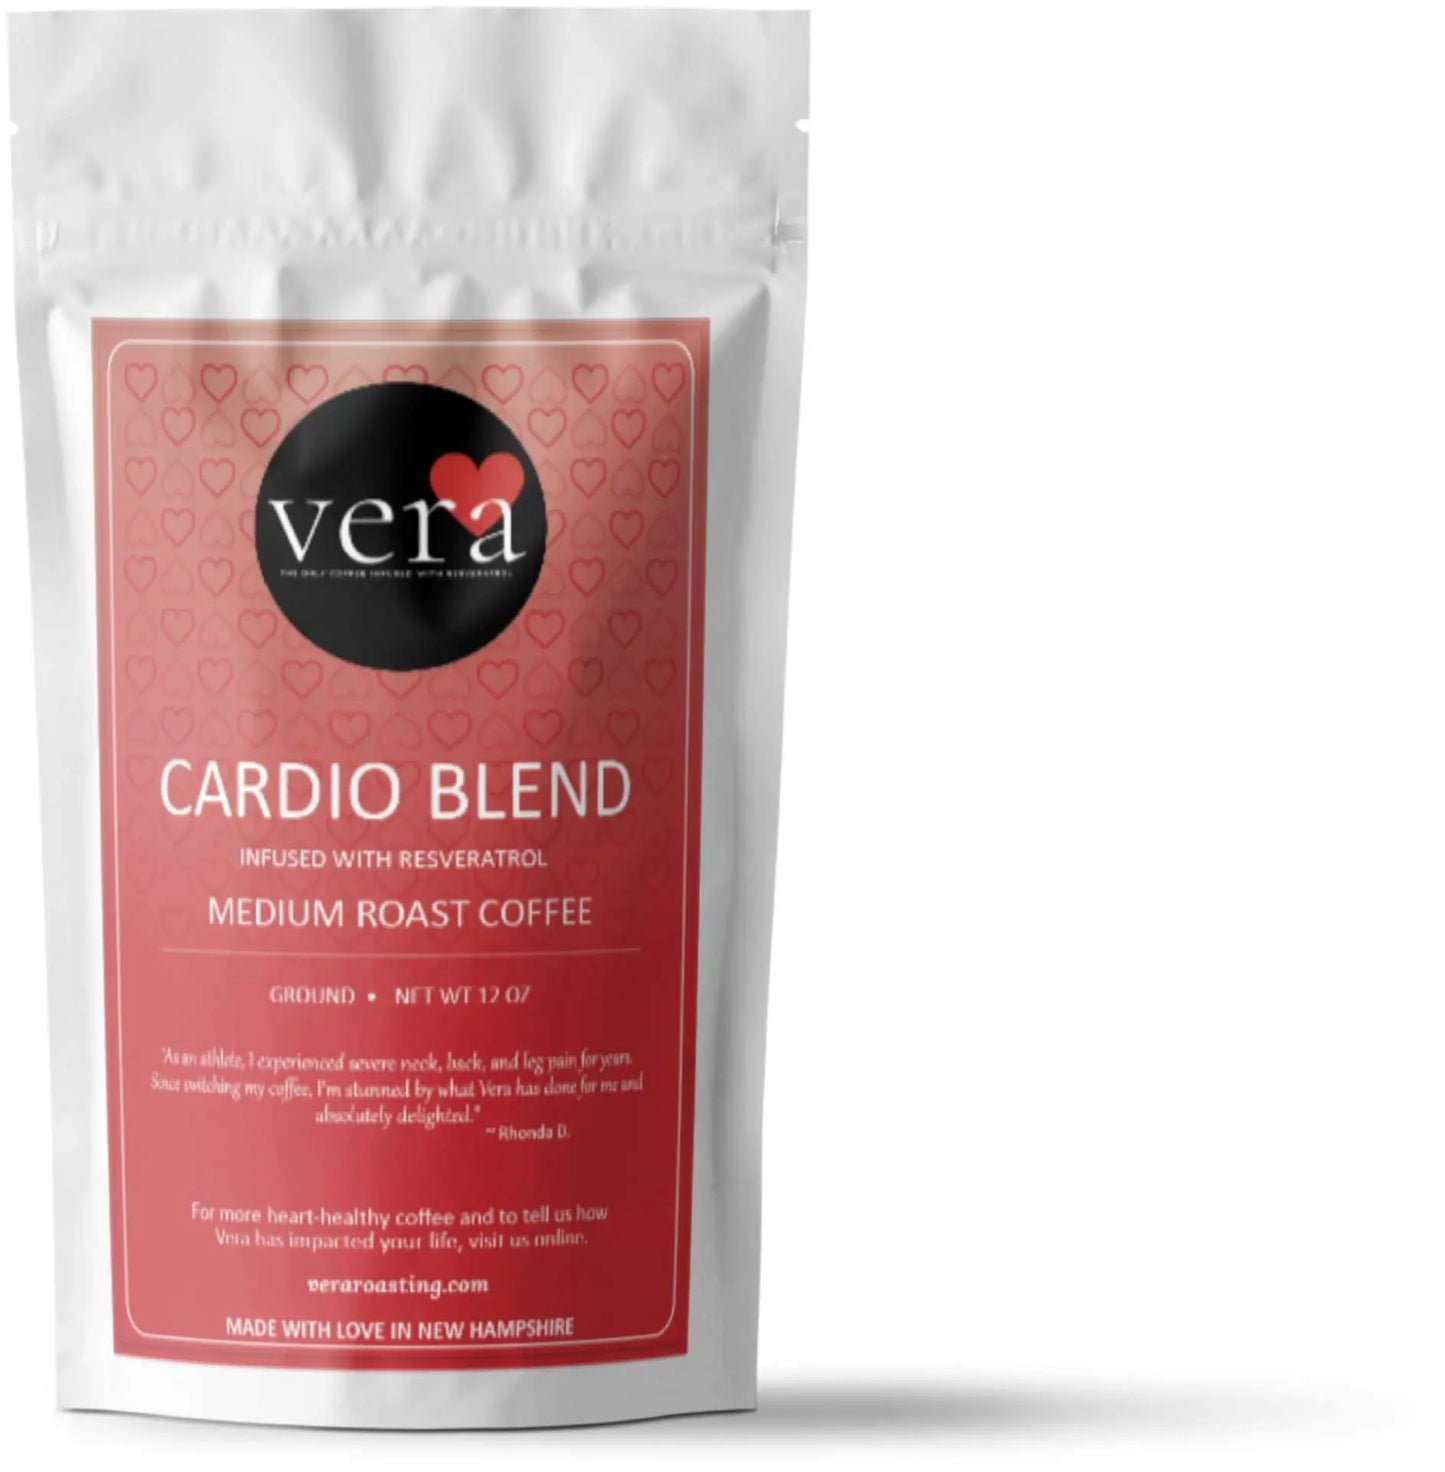 Cardio Blend Vera Roasting Co.